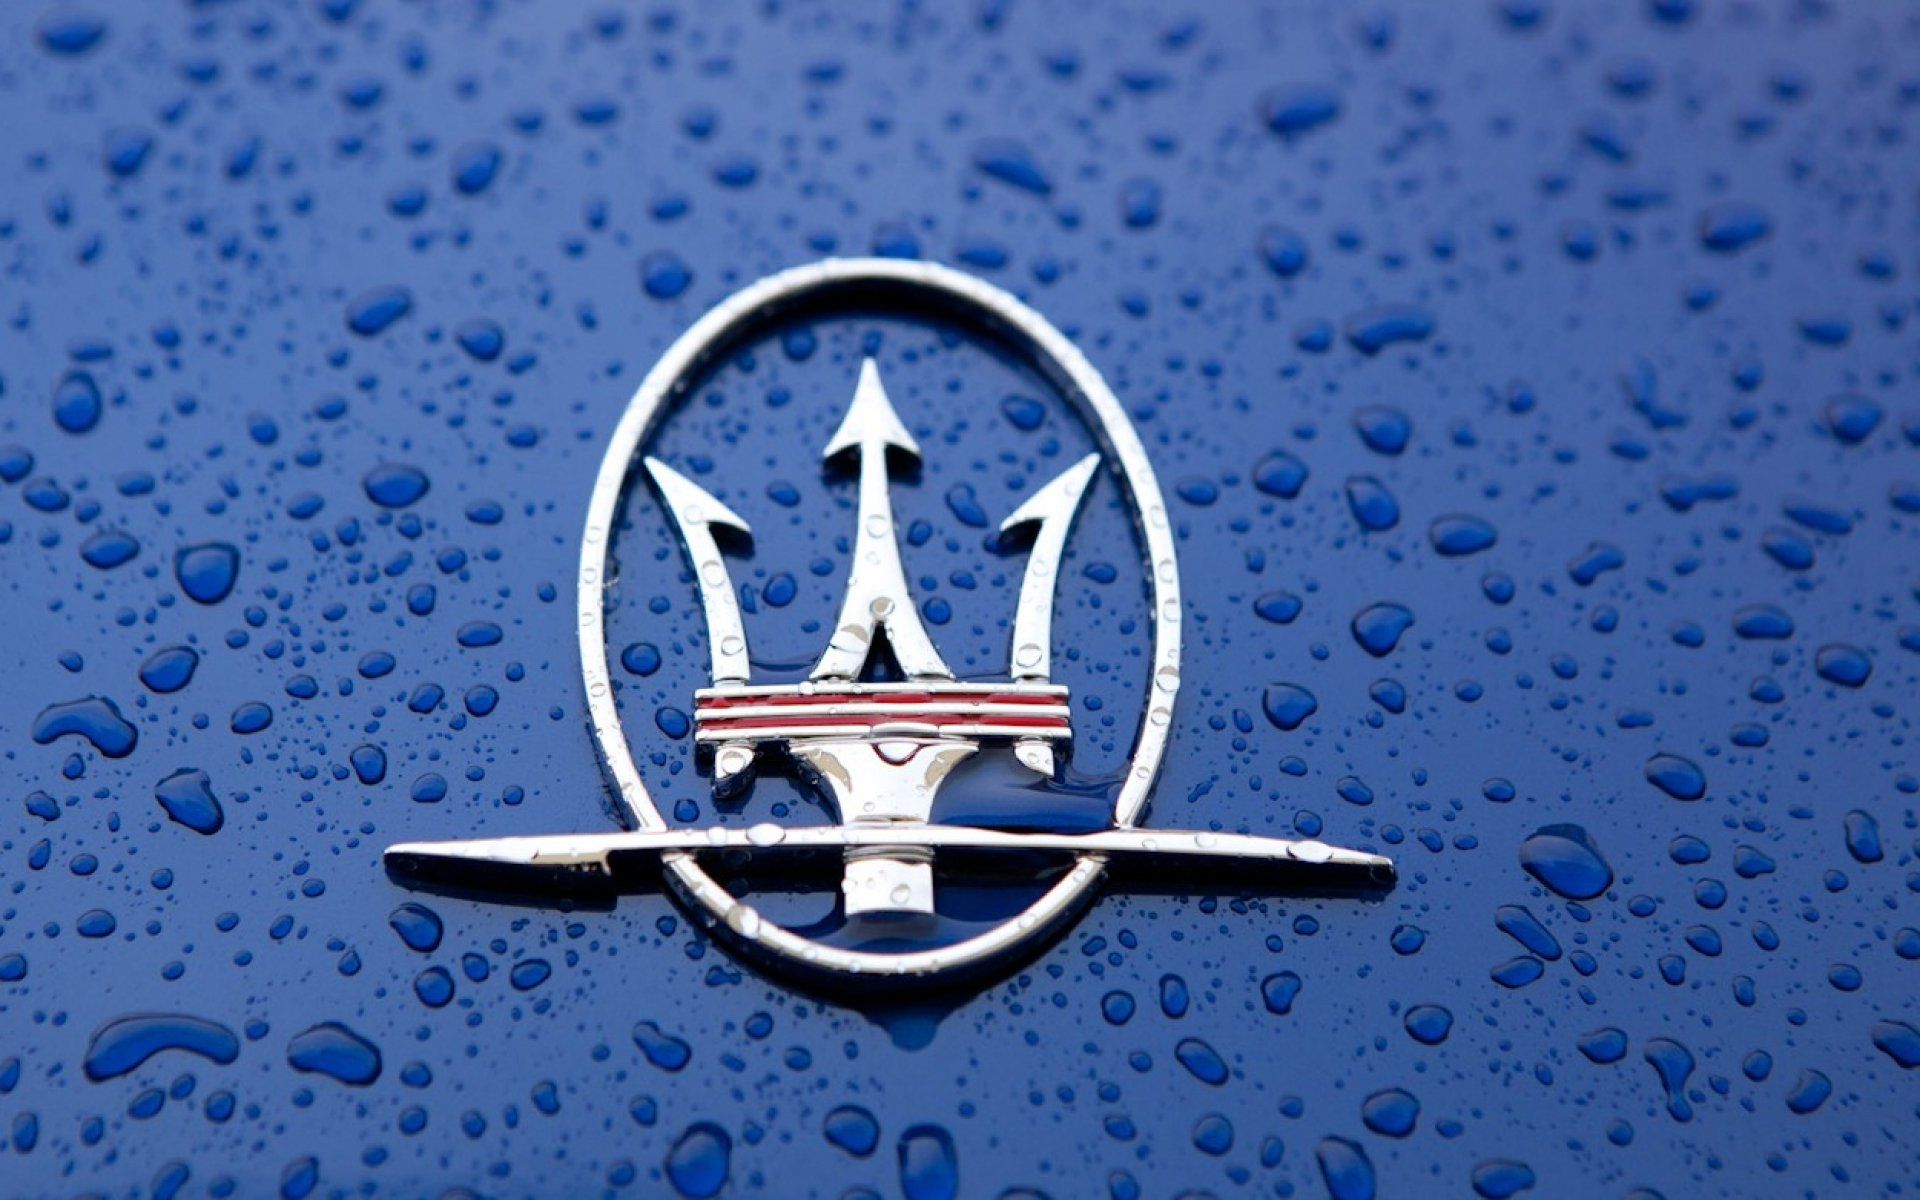 Maserati Symbol Wallpapers